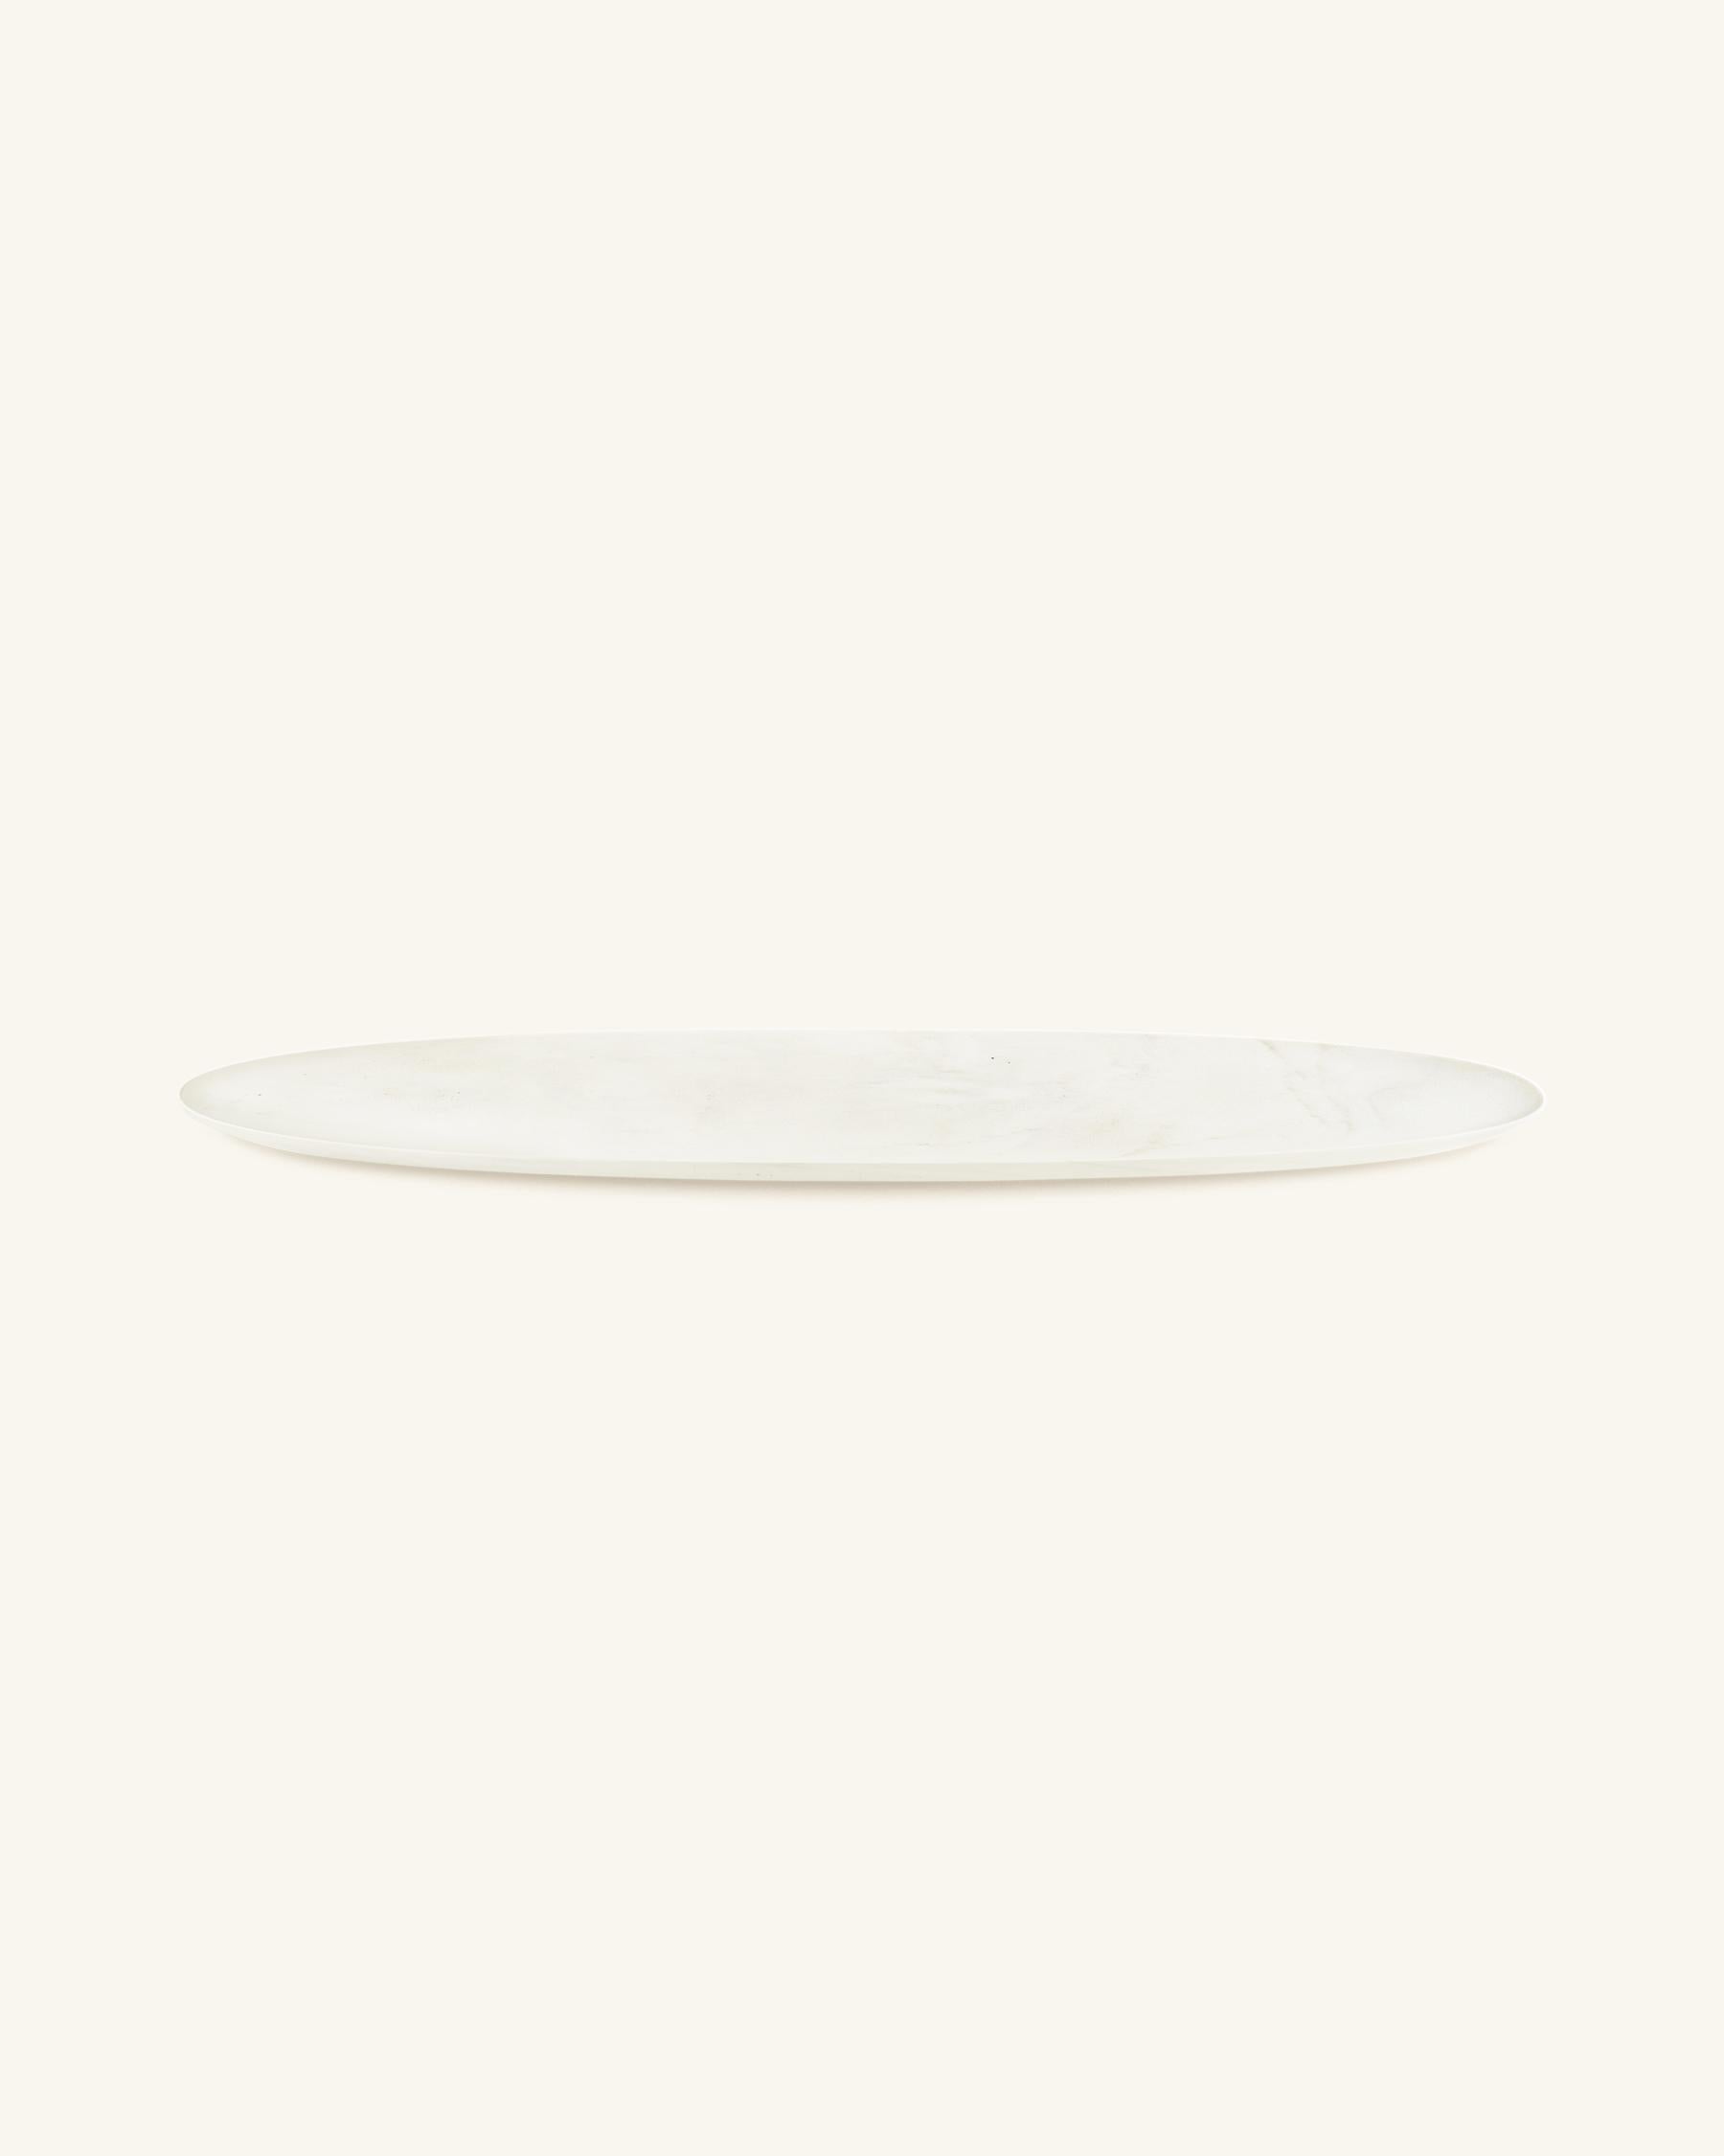 Contemporary Cremo Delicato Marble Sepia Trey by Homefolks For Sale 1